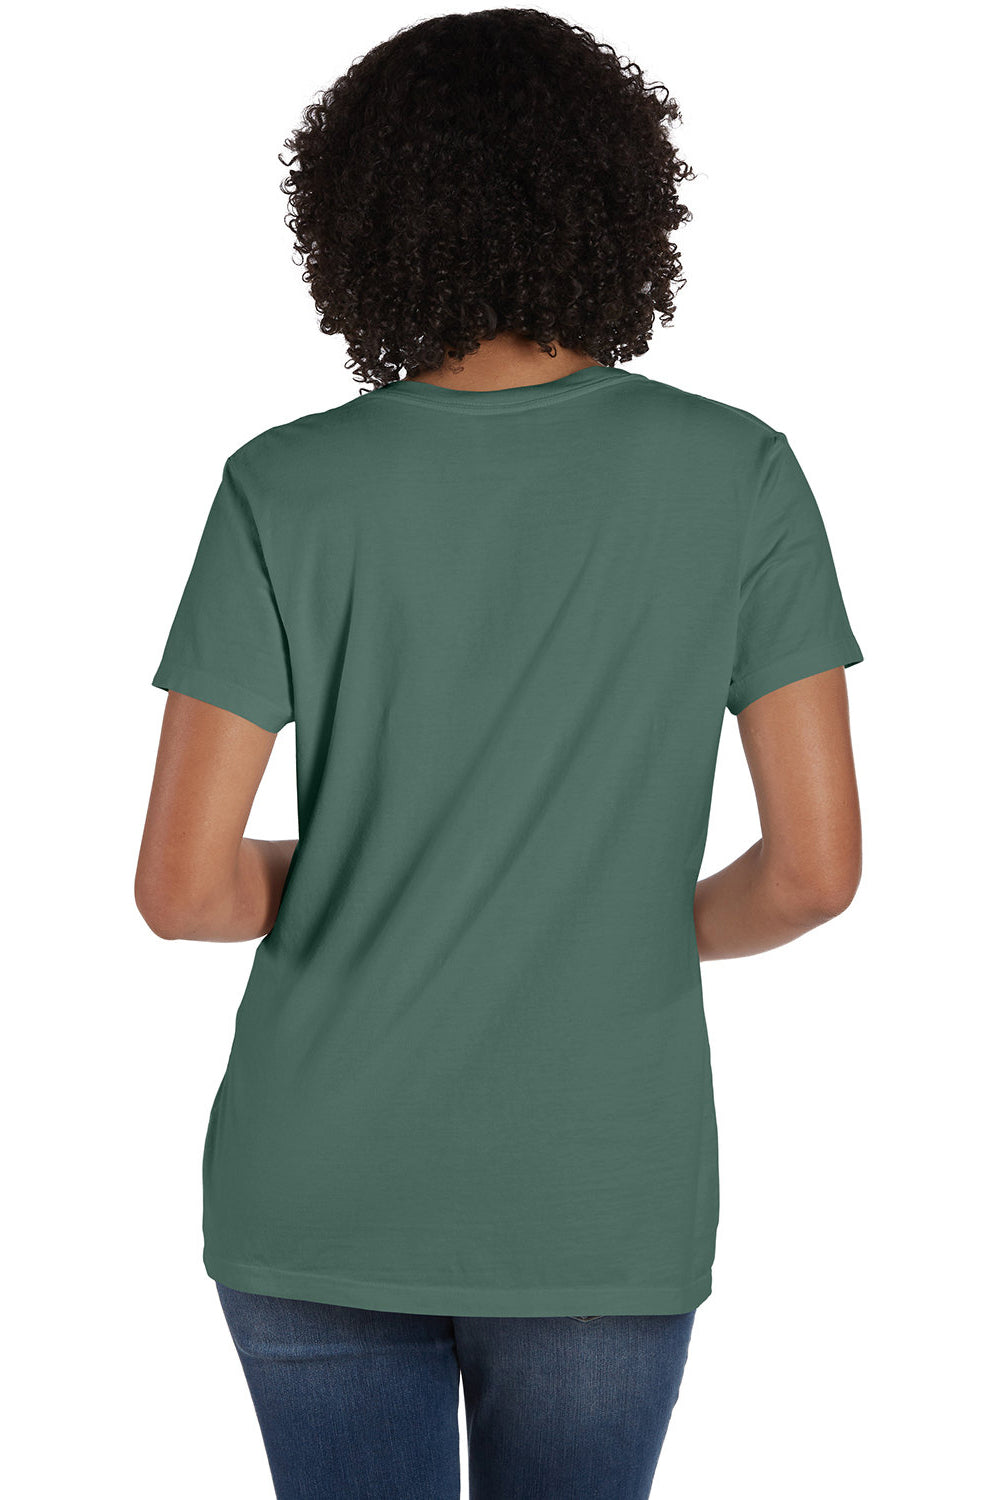 ComfortWash By Hanes GDH125 Mens Garment Dyed Short Sleeve V-Neck T-Shirt Cypress Green Model Back